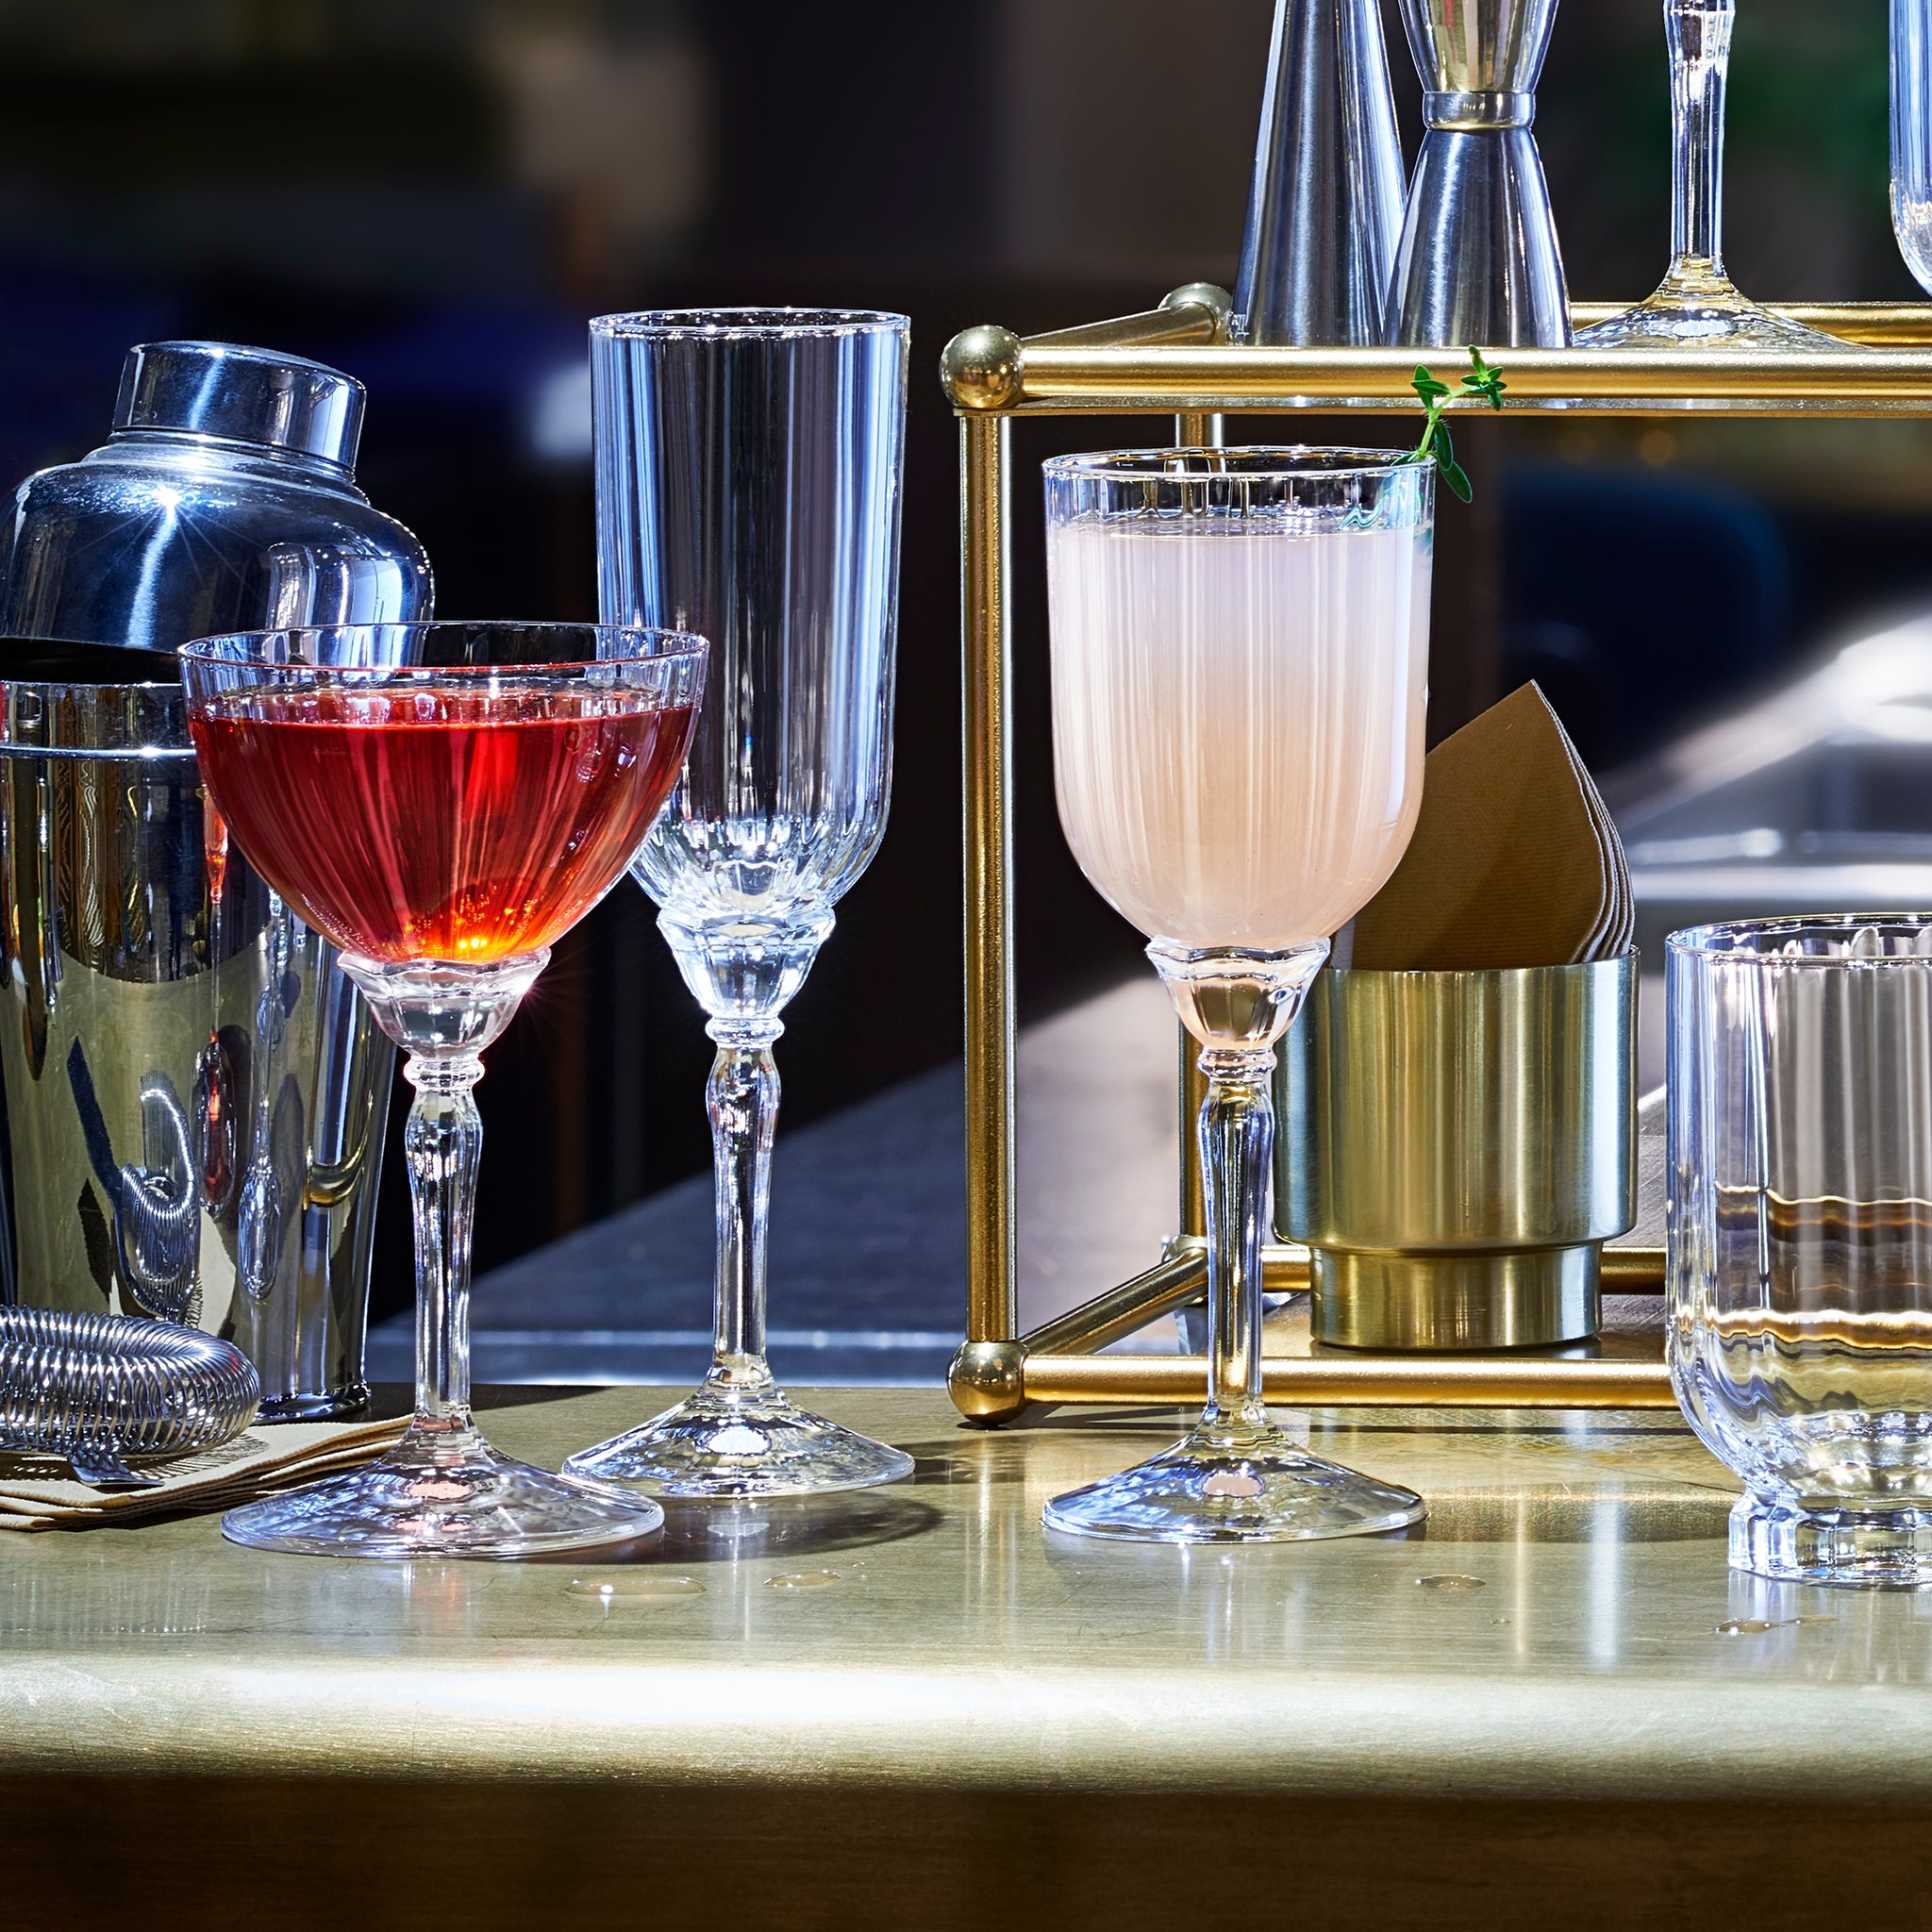 Florian 8.10 oz. Champagne / Martini Cocktail Glasses (Set of 4)